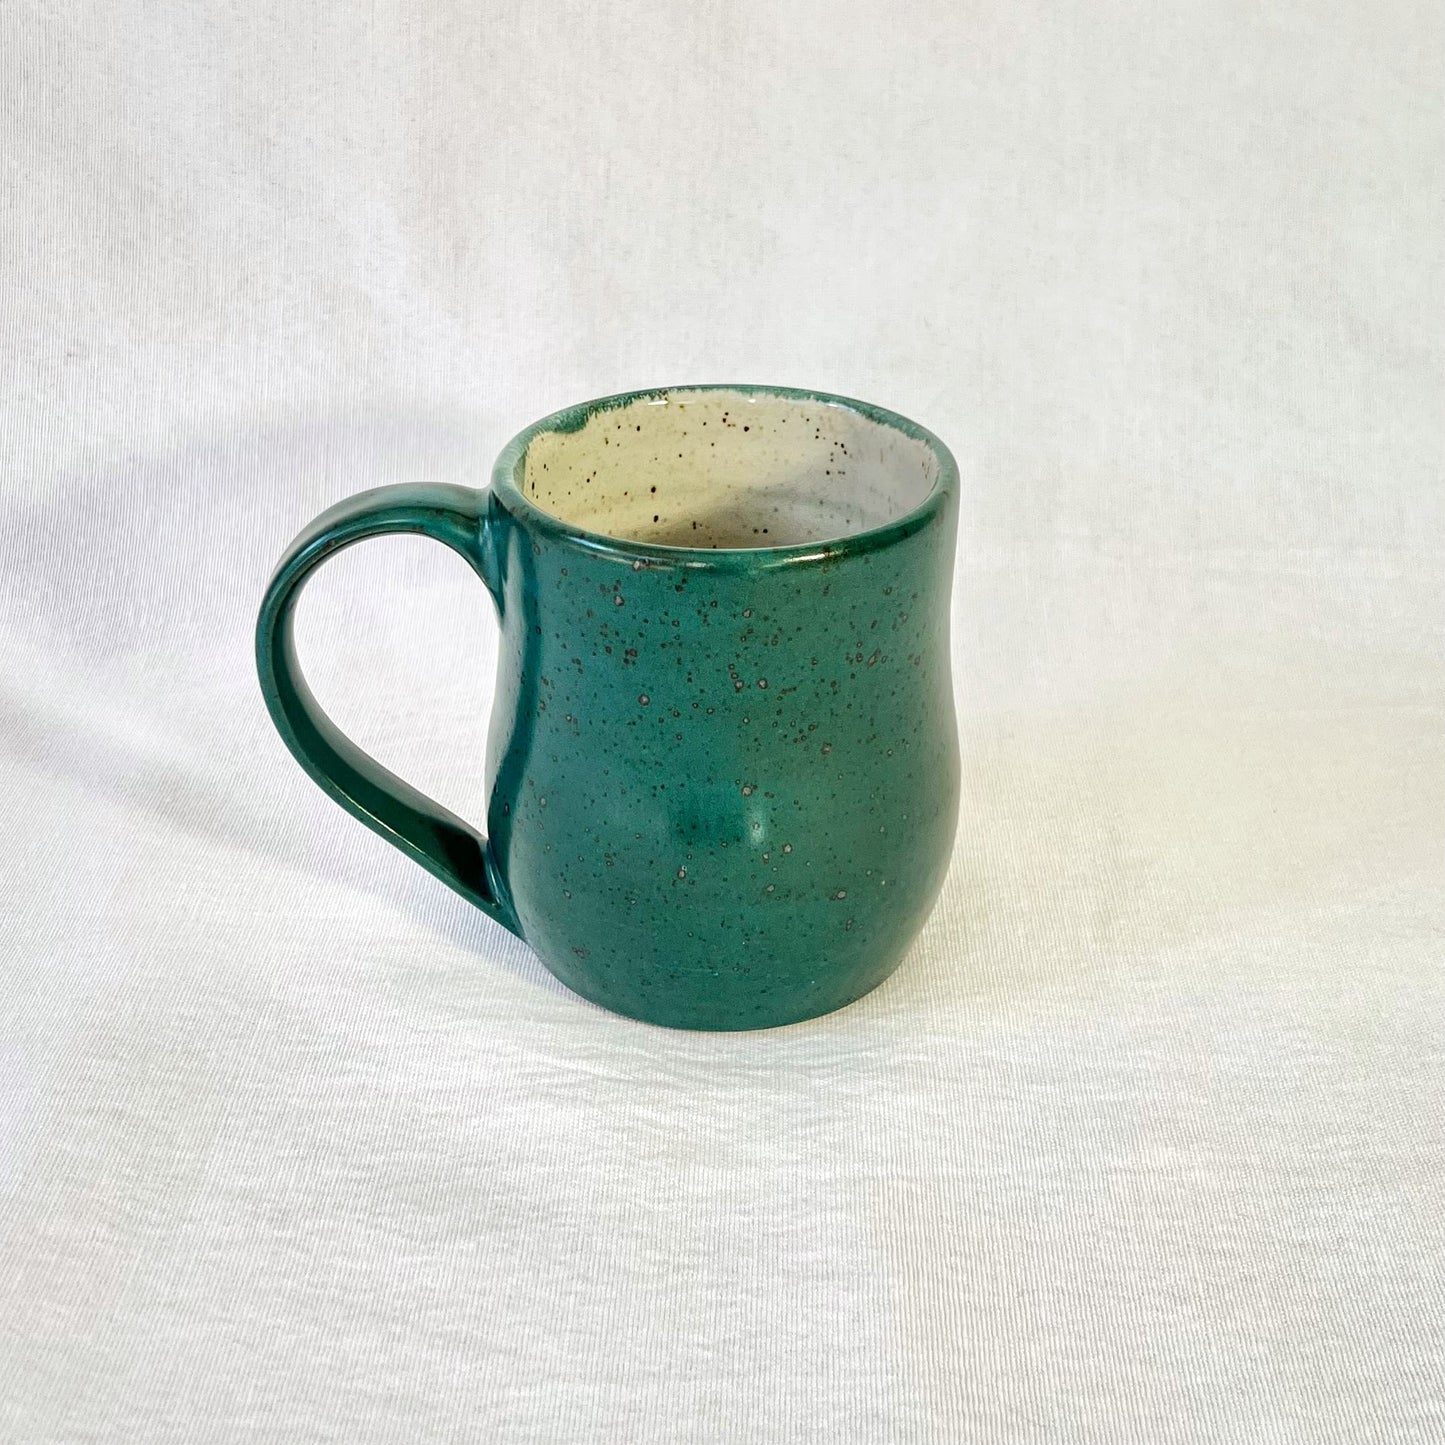 Turquoise speckled mug